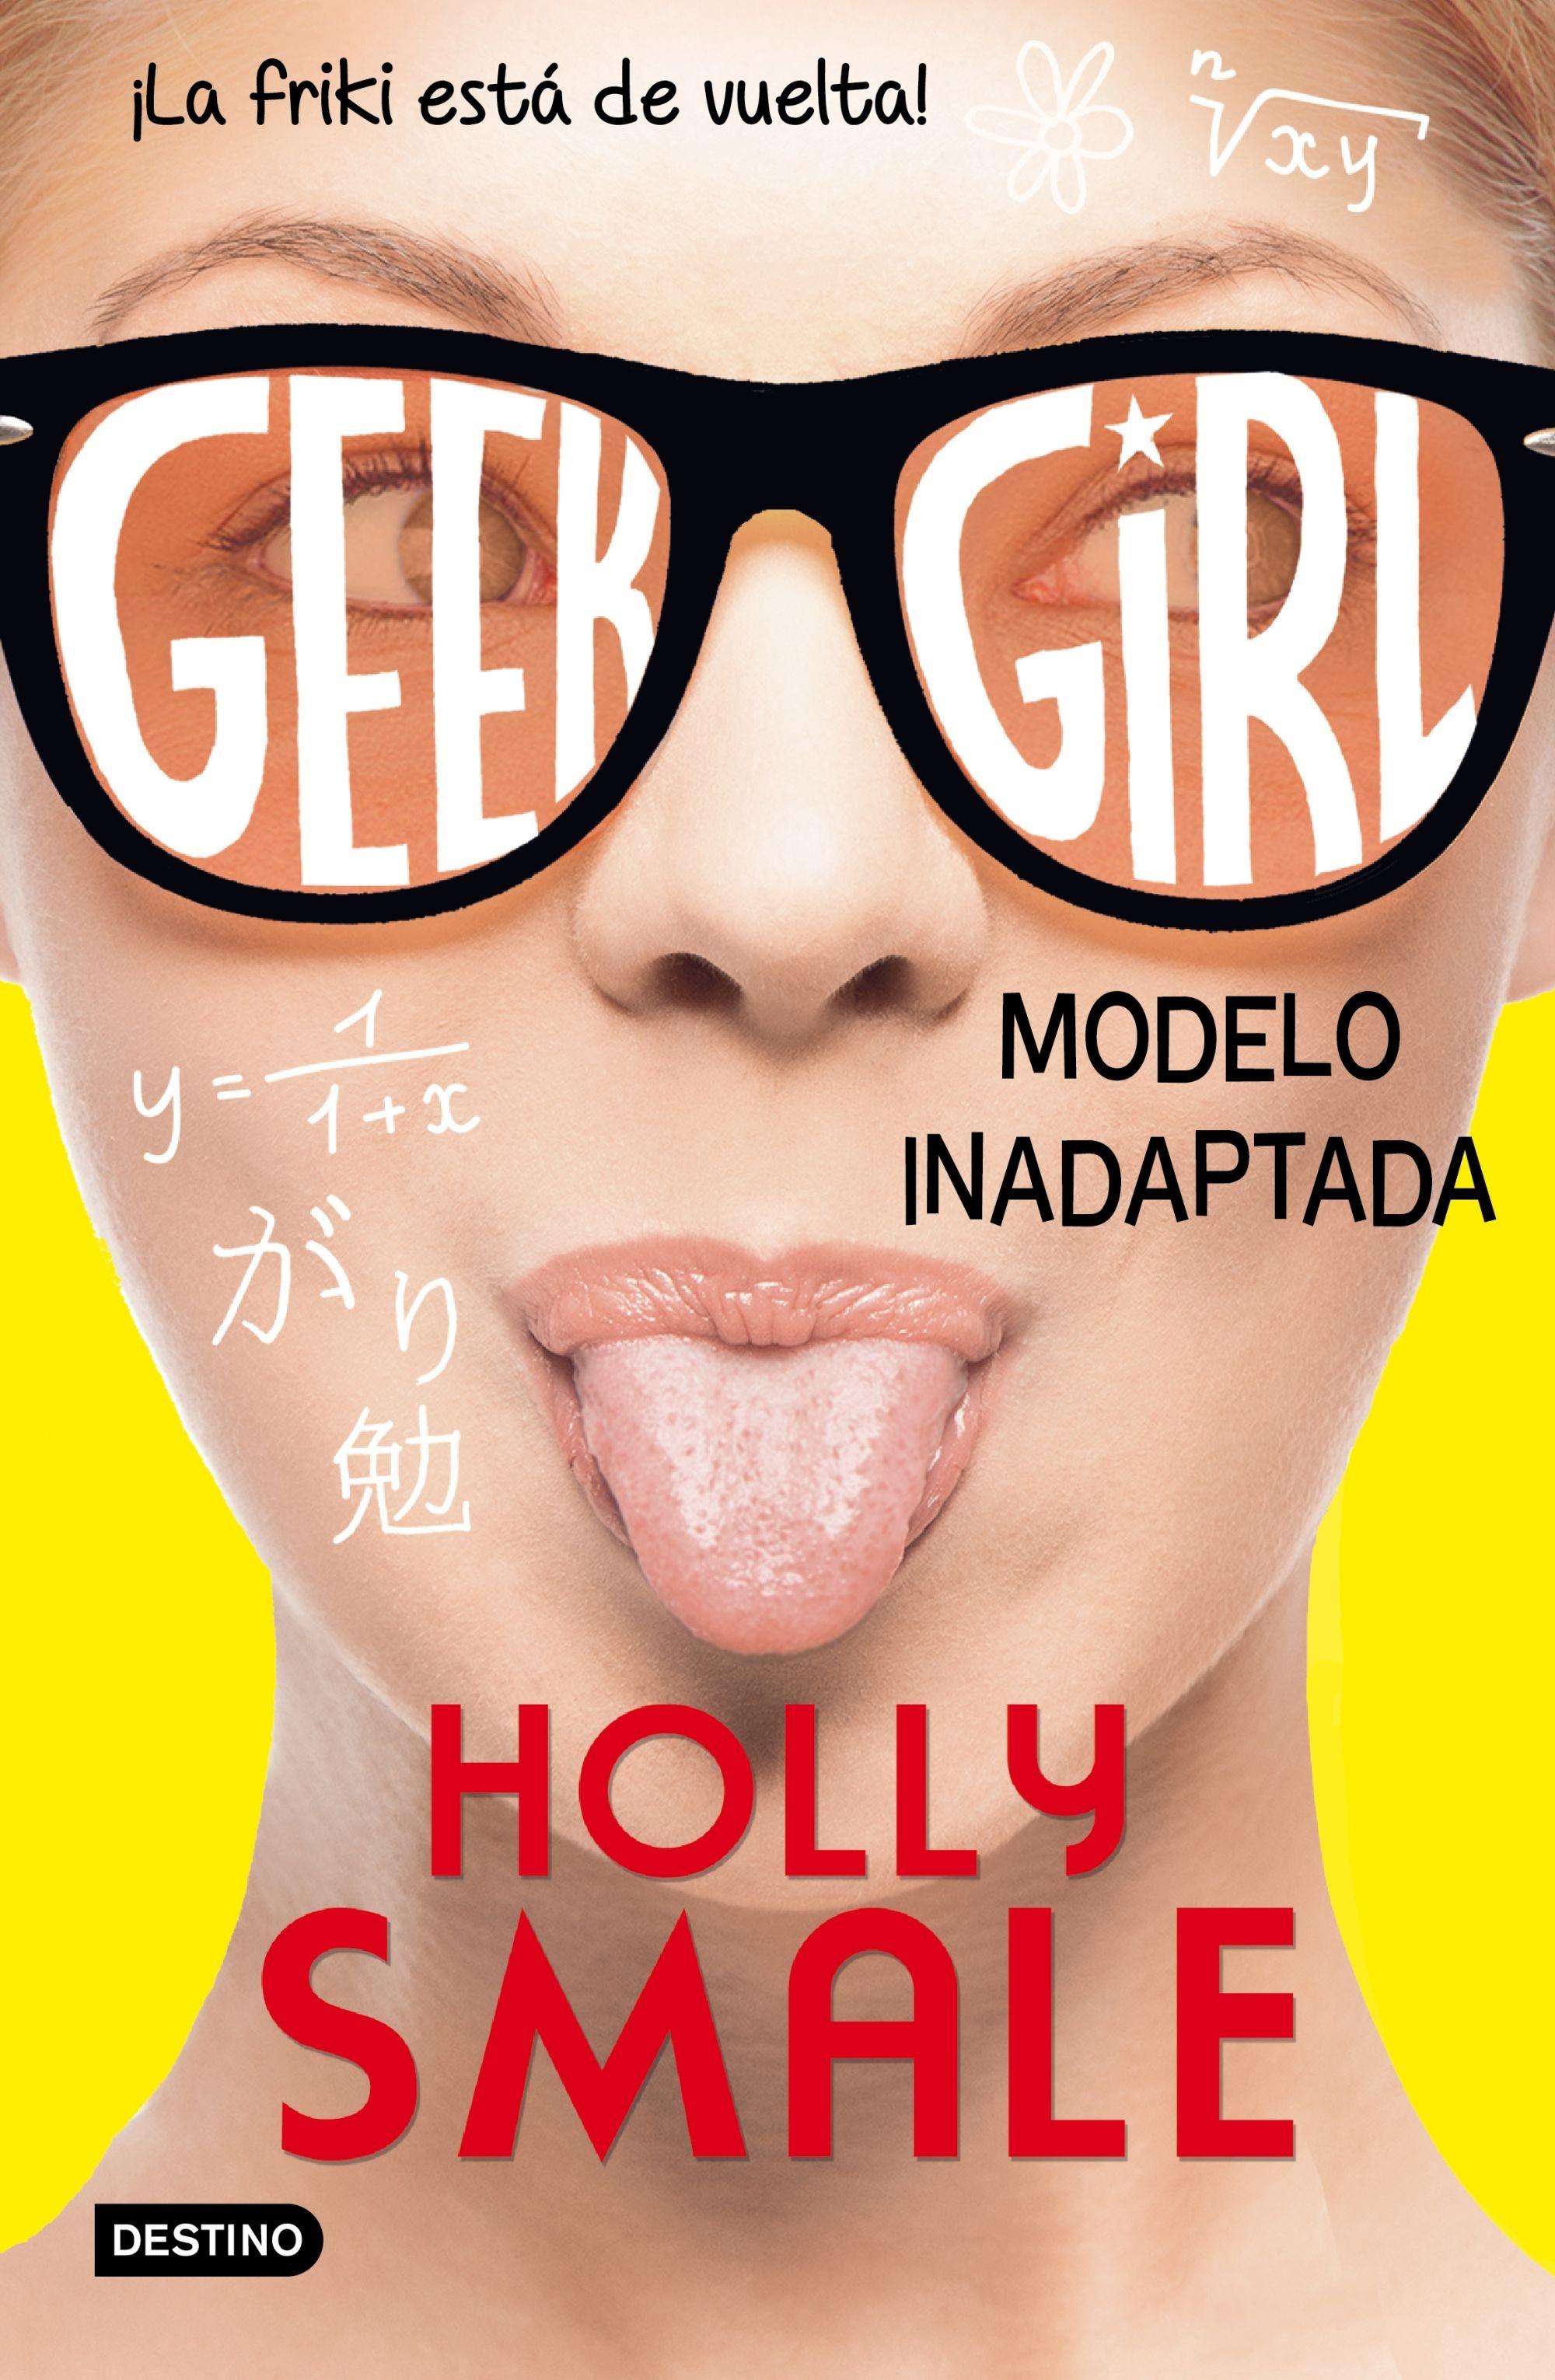 Geek Girl 2. Modelo Inadaptada